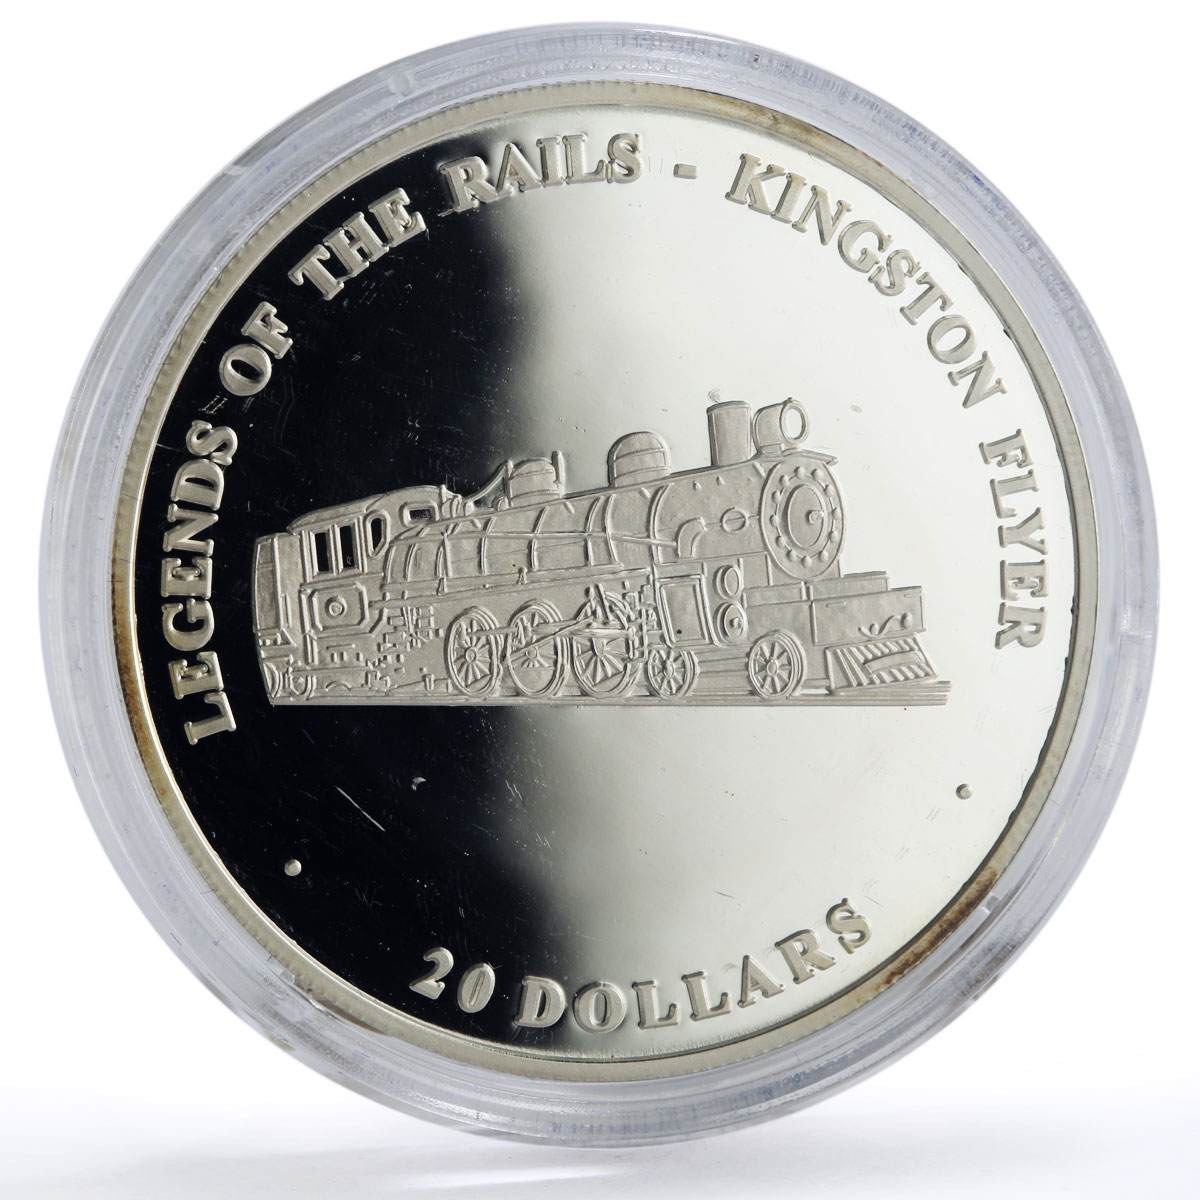 Liberia 20 dollars Trains Railway Locomotive Kingston Flyer silver coin 2003